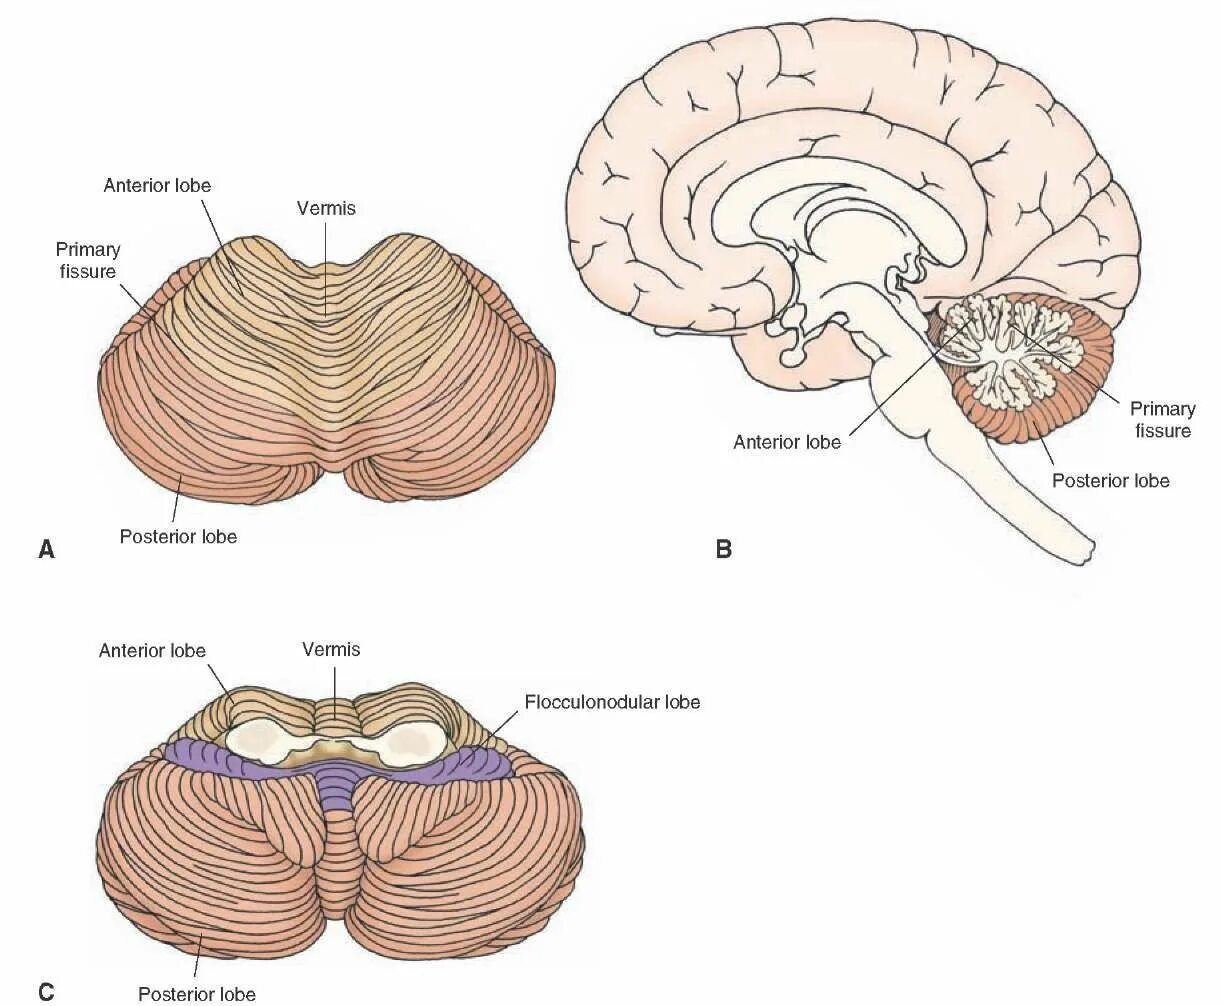 Мозжечок (cerebellum). Vermis мозжечка. Мозжечок анатомия. Cerebellum анатомия. В задний мозг входит мозжечок